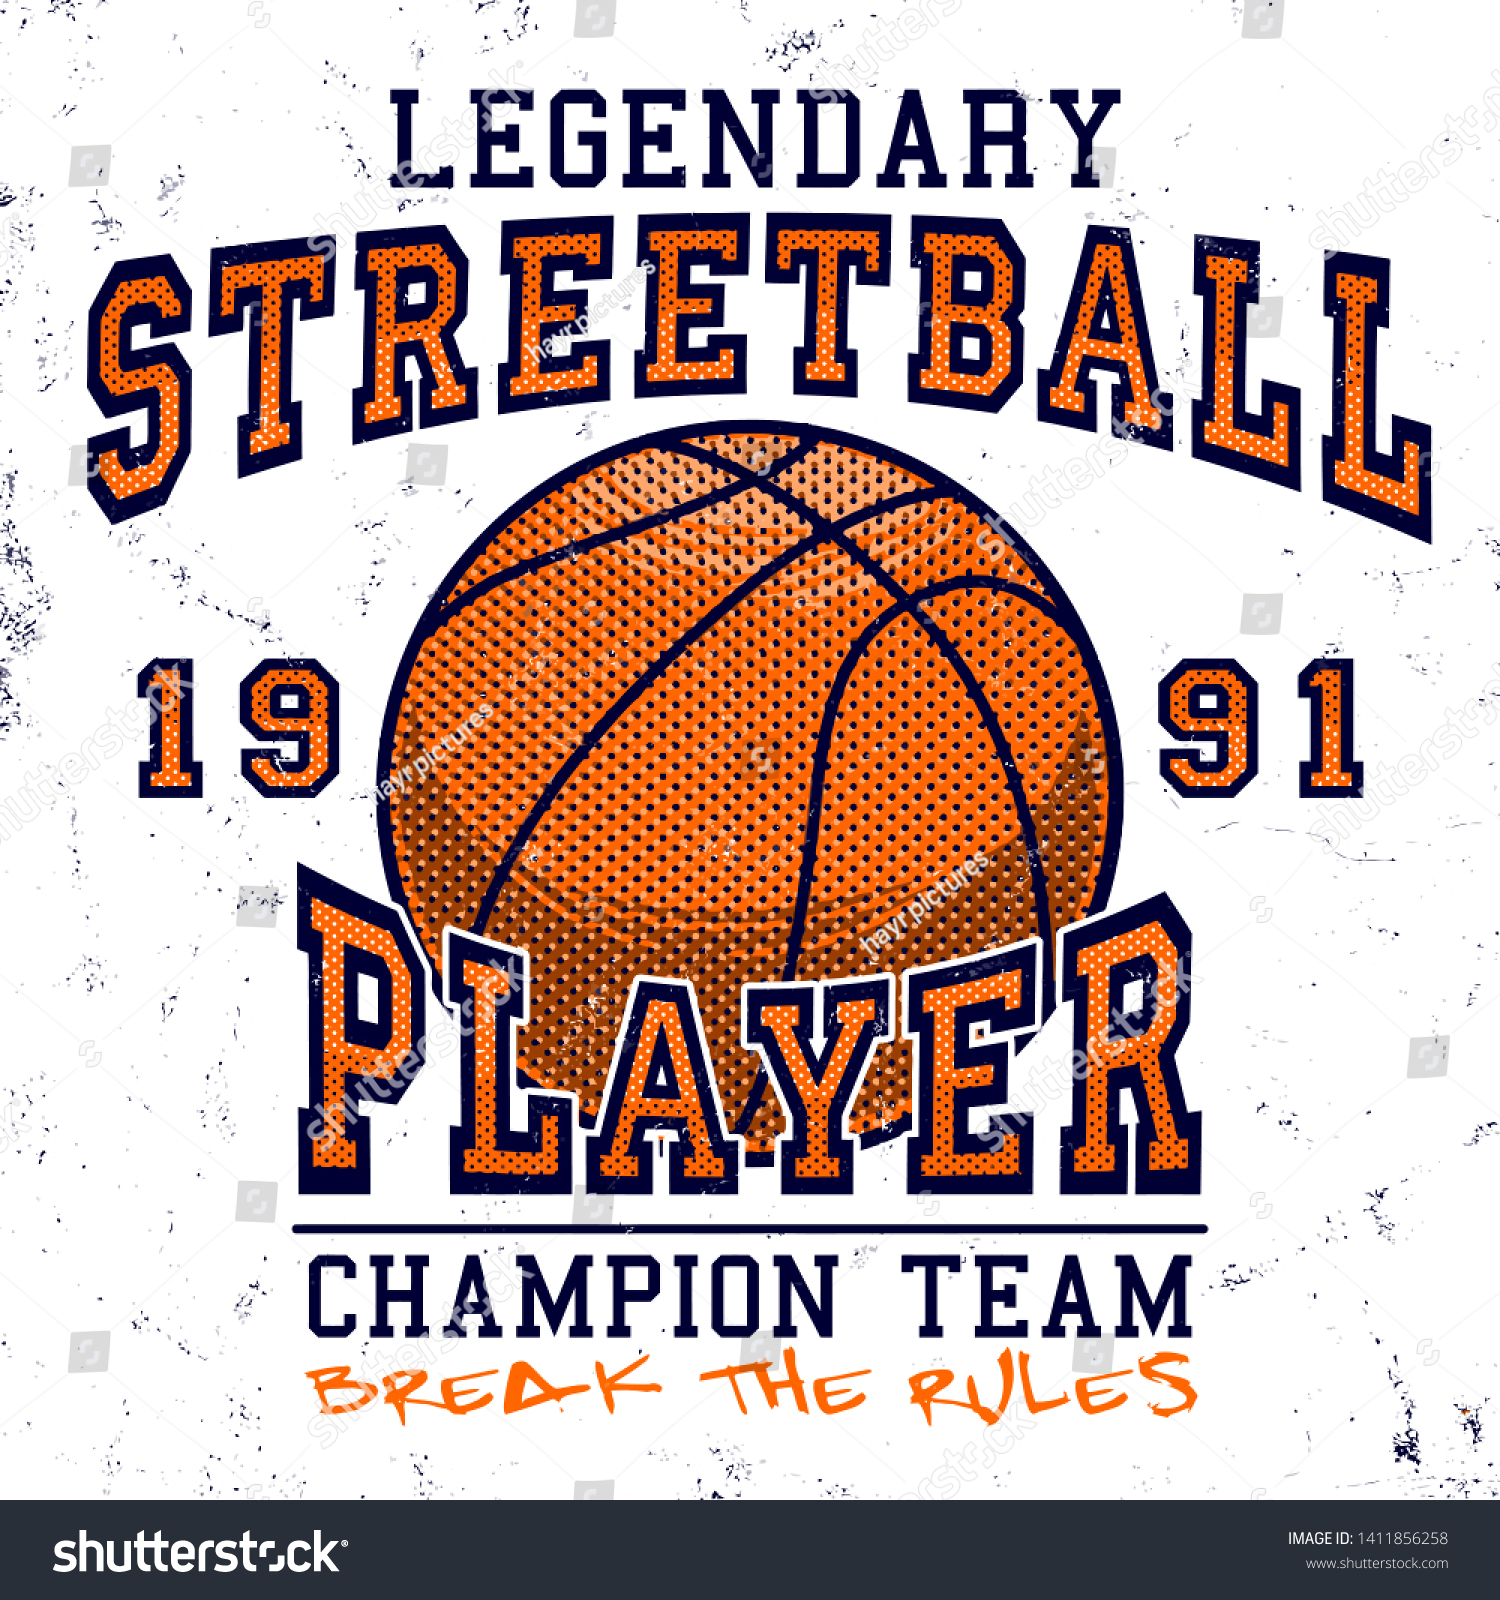 street basketball rules